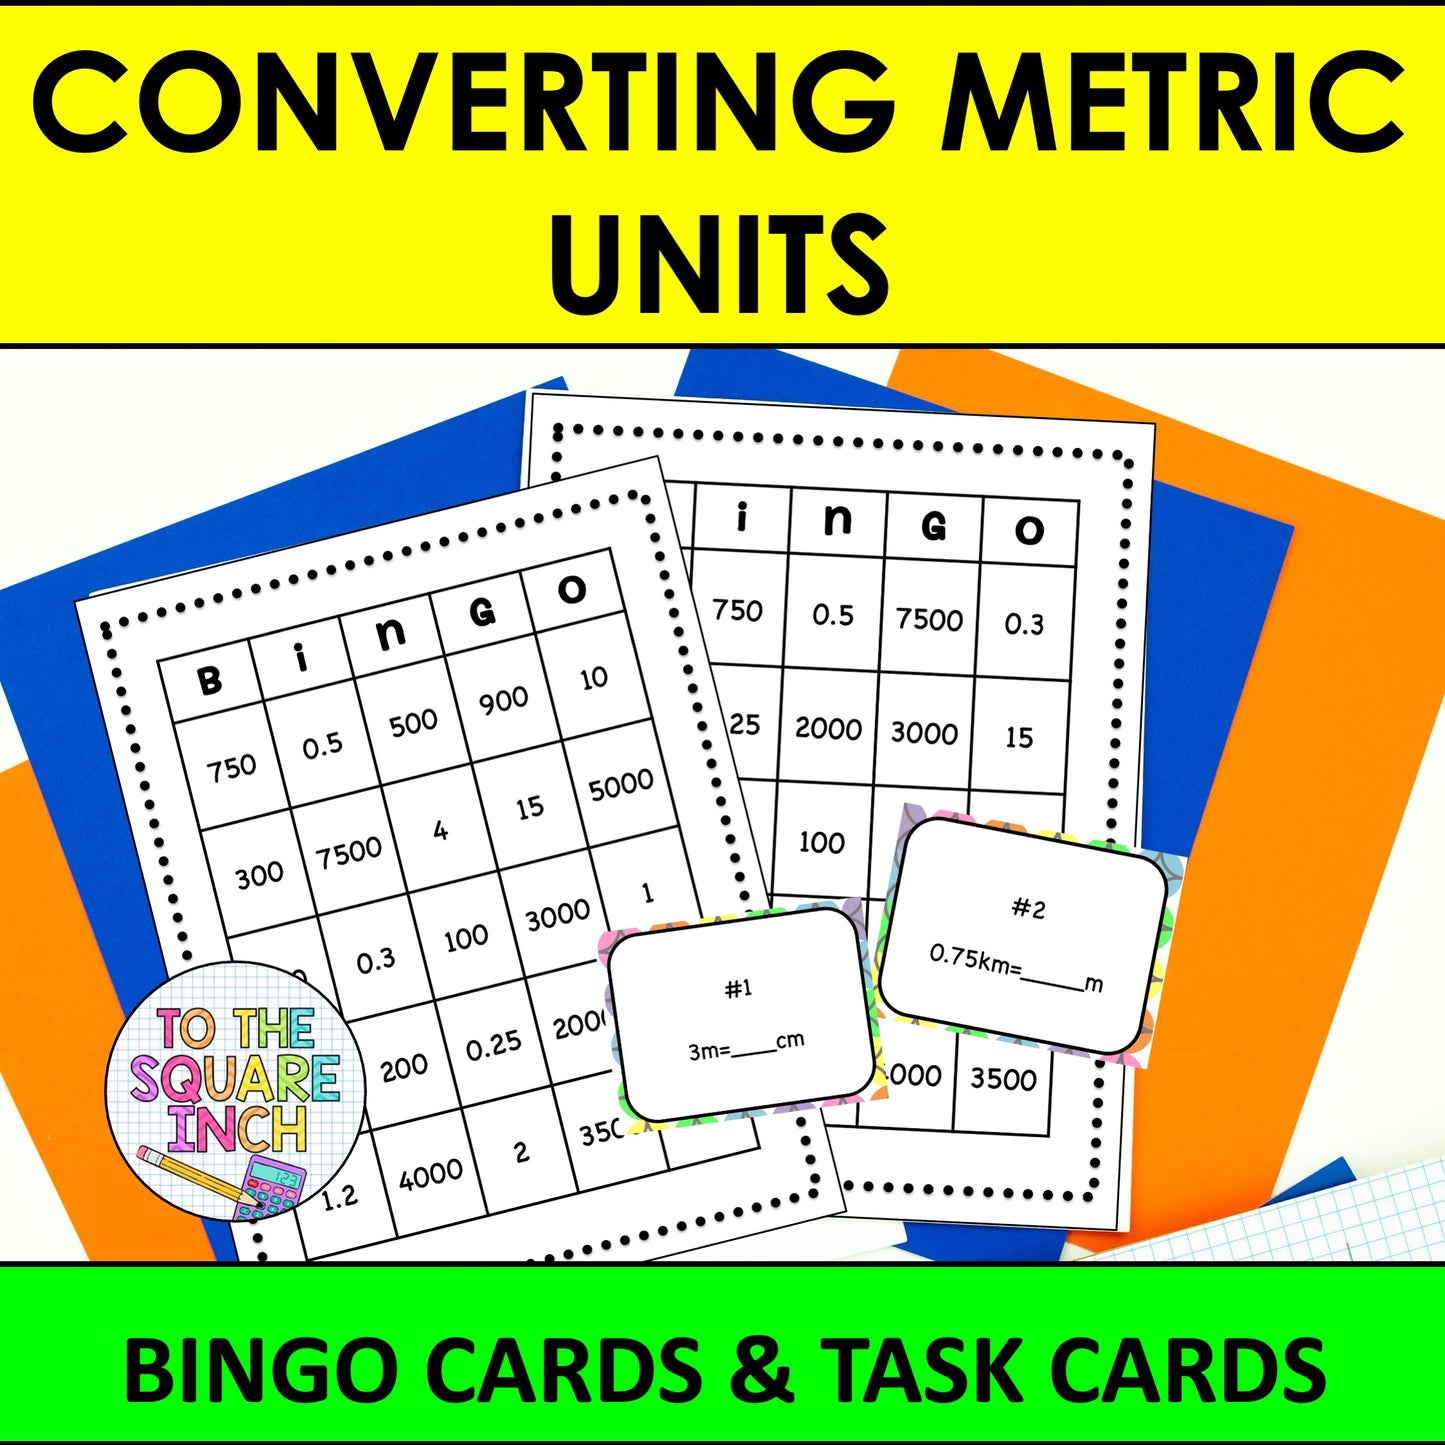 Converting Metric Units Bingo Game